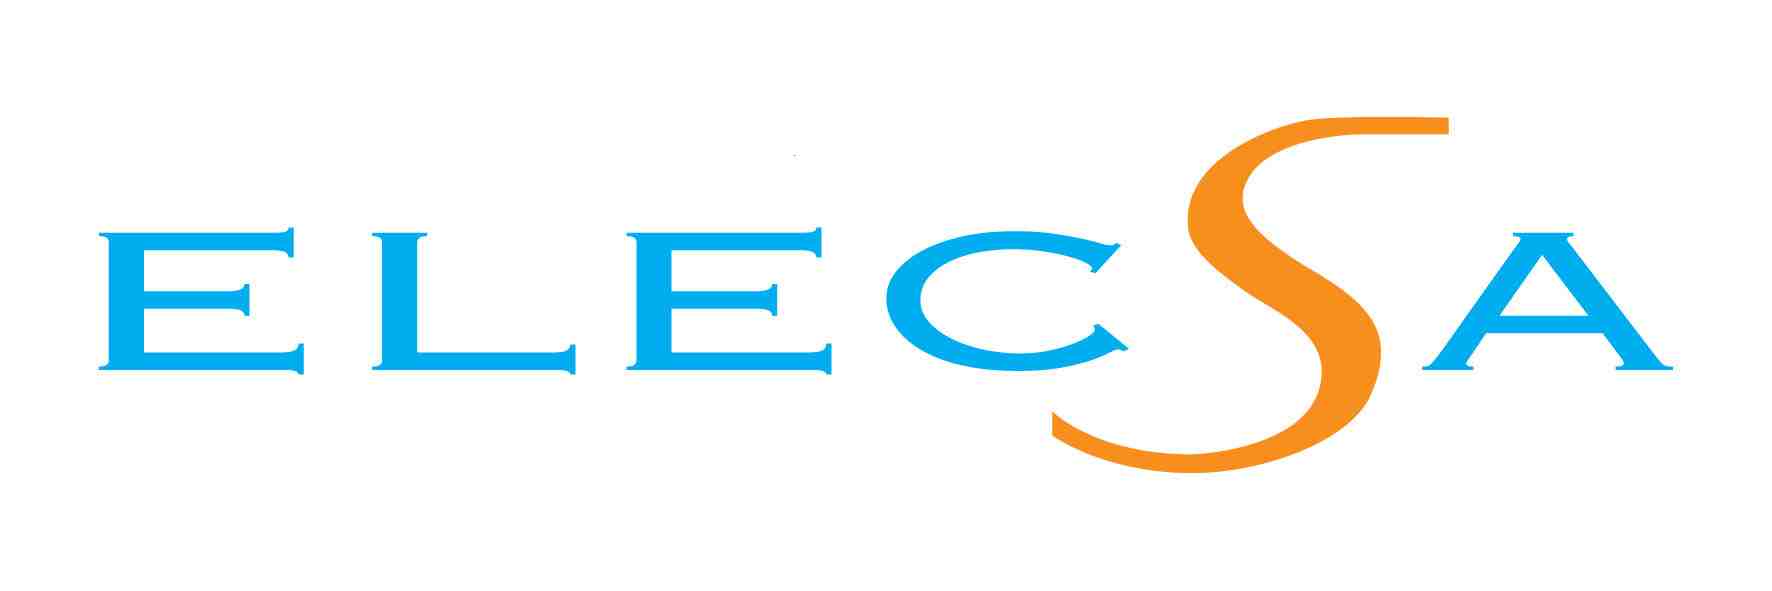 Elecsa_logo.jpg